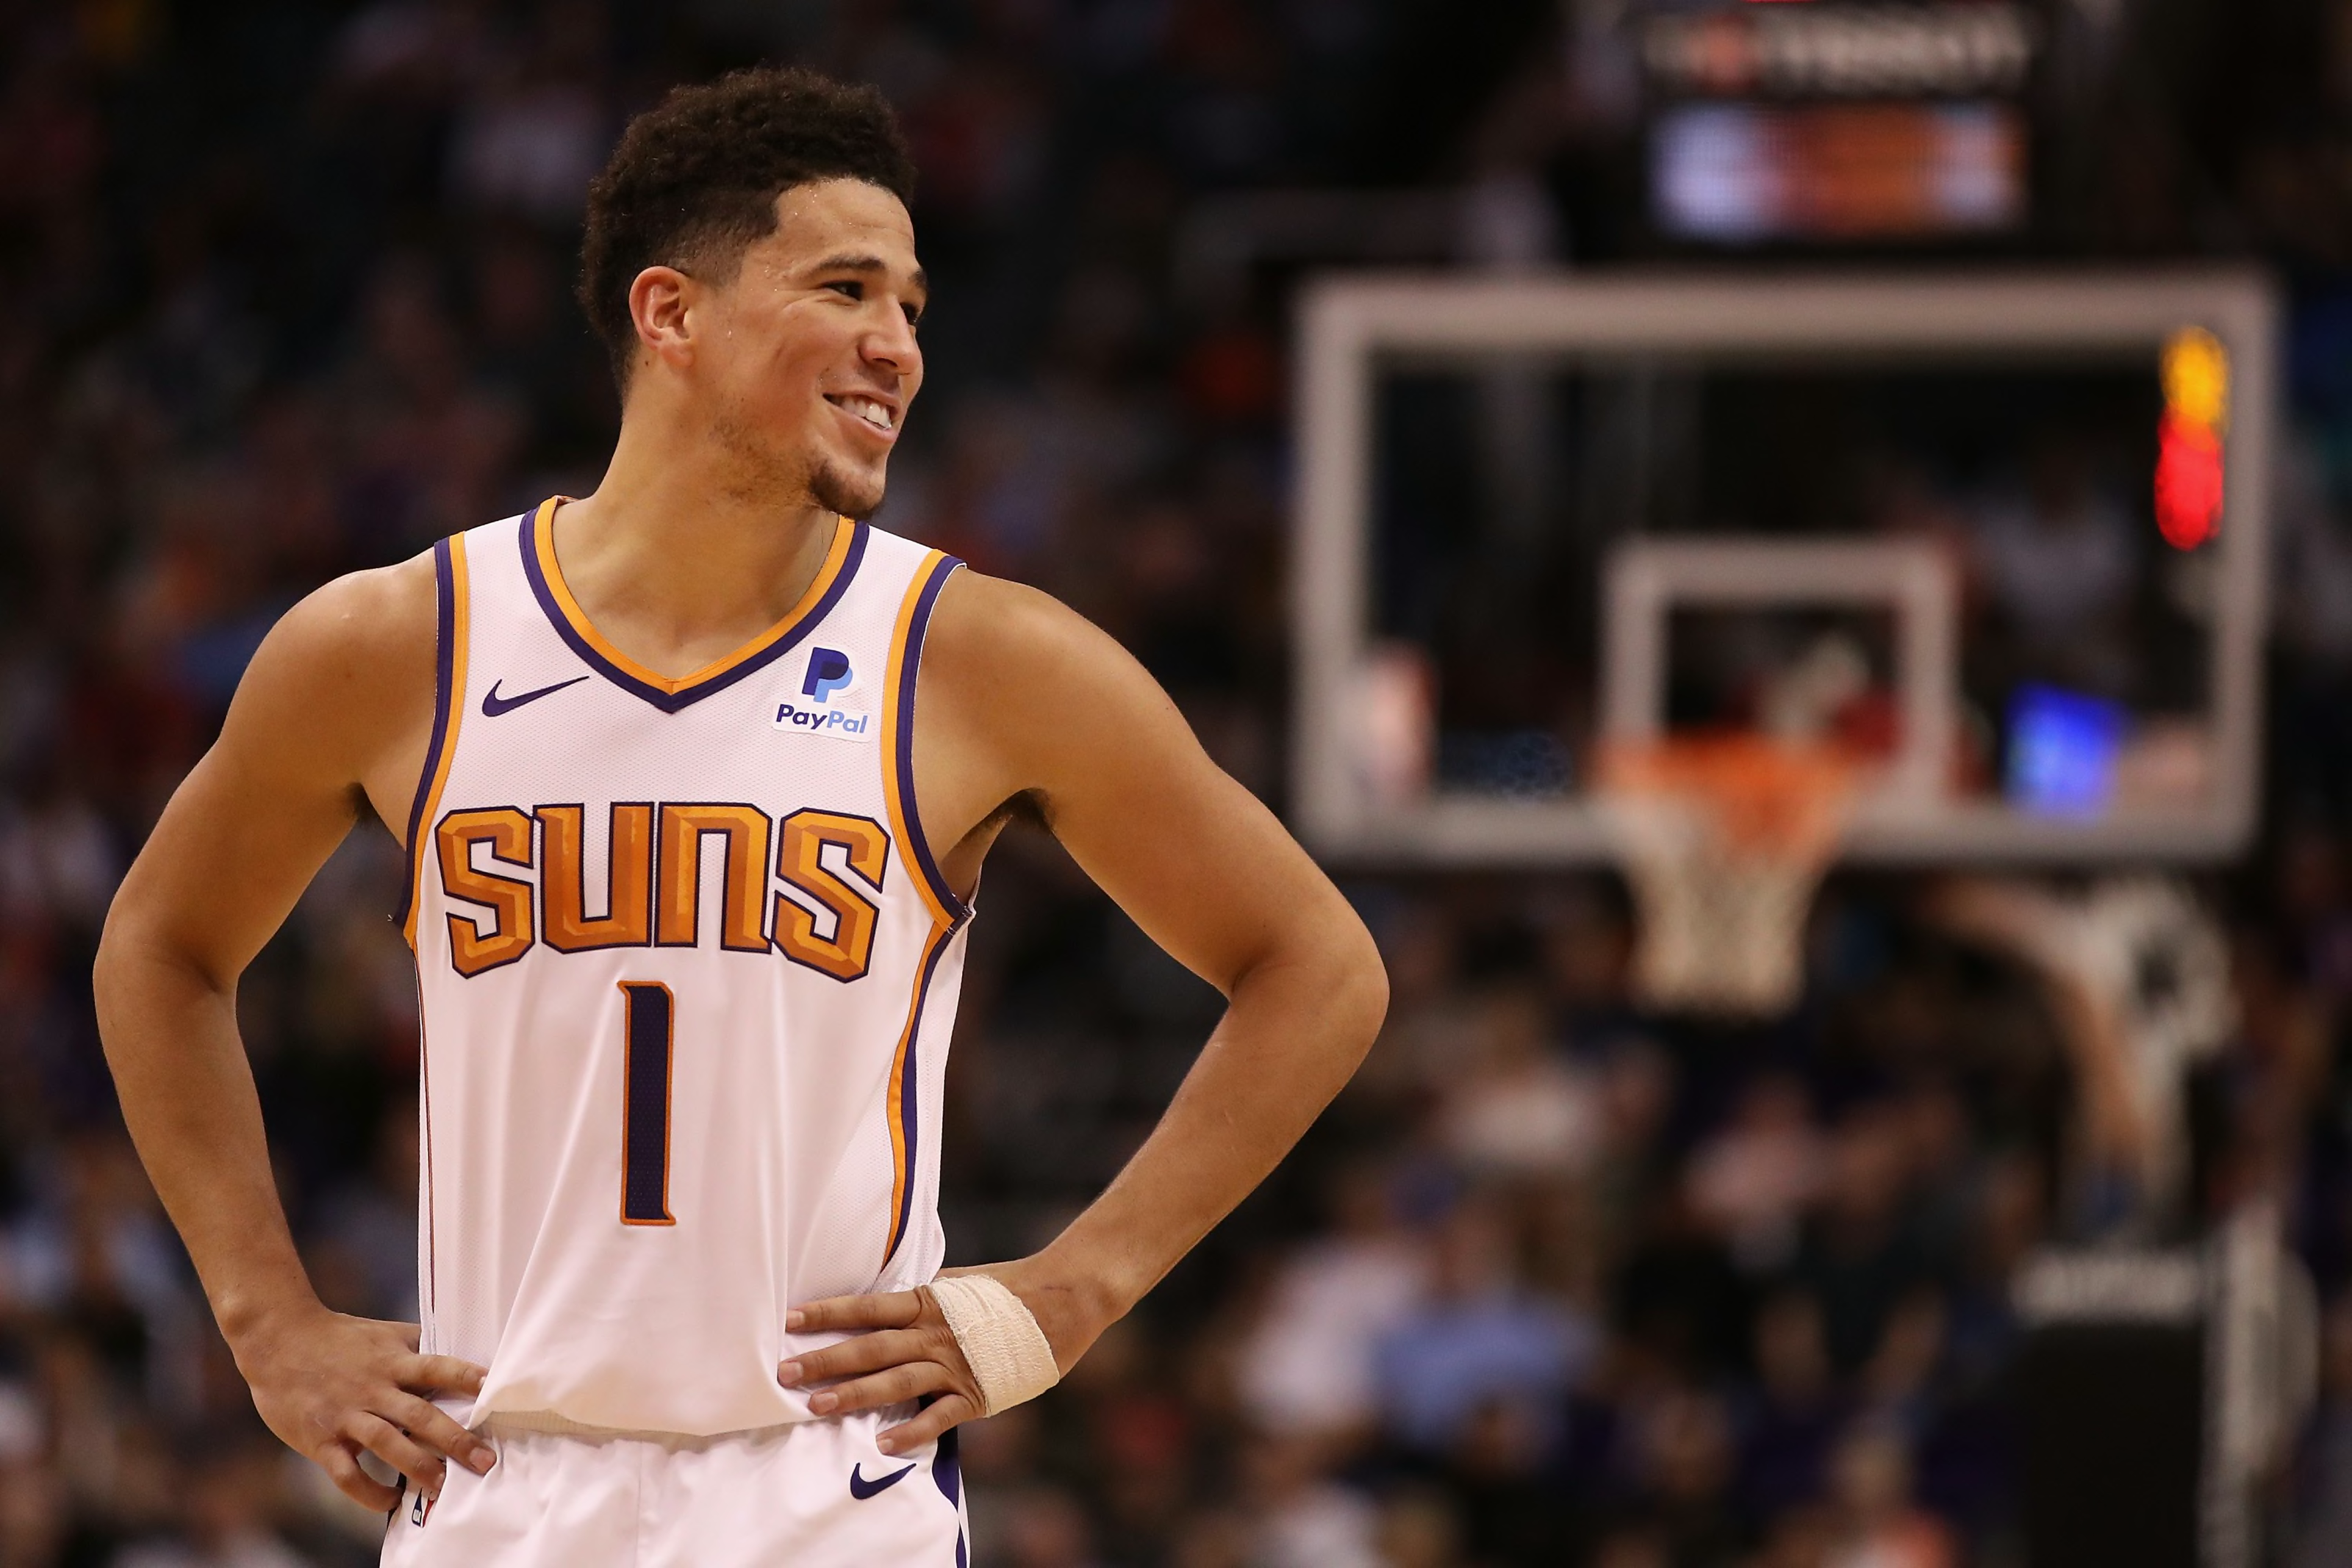 Nba Draft 2019 Top 3 Options For Phoenix Suns To Select At Pick No 32